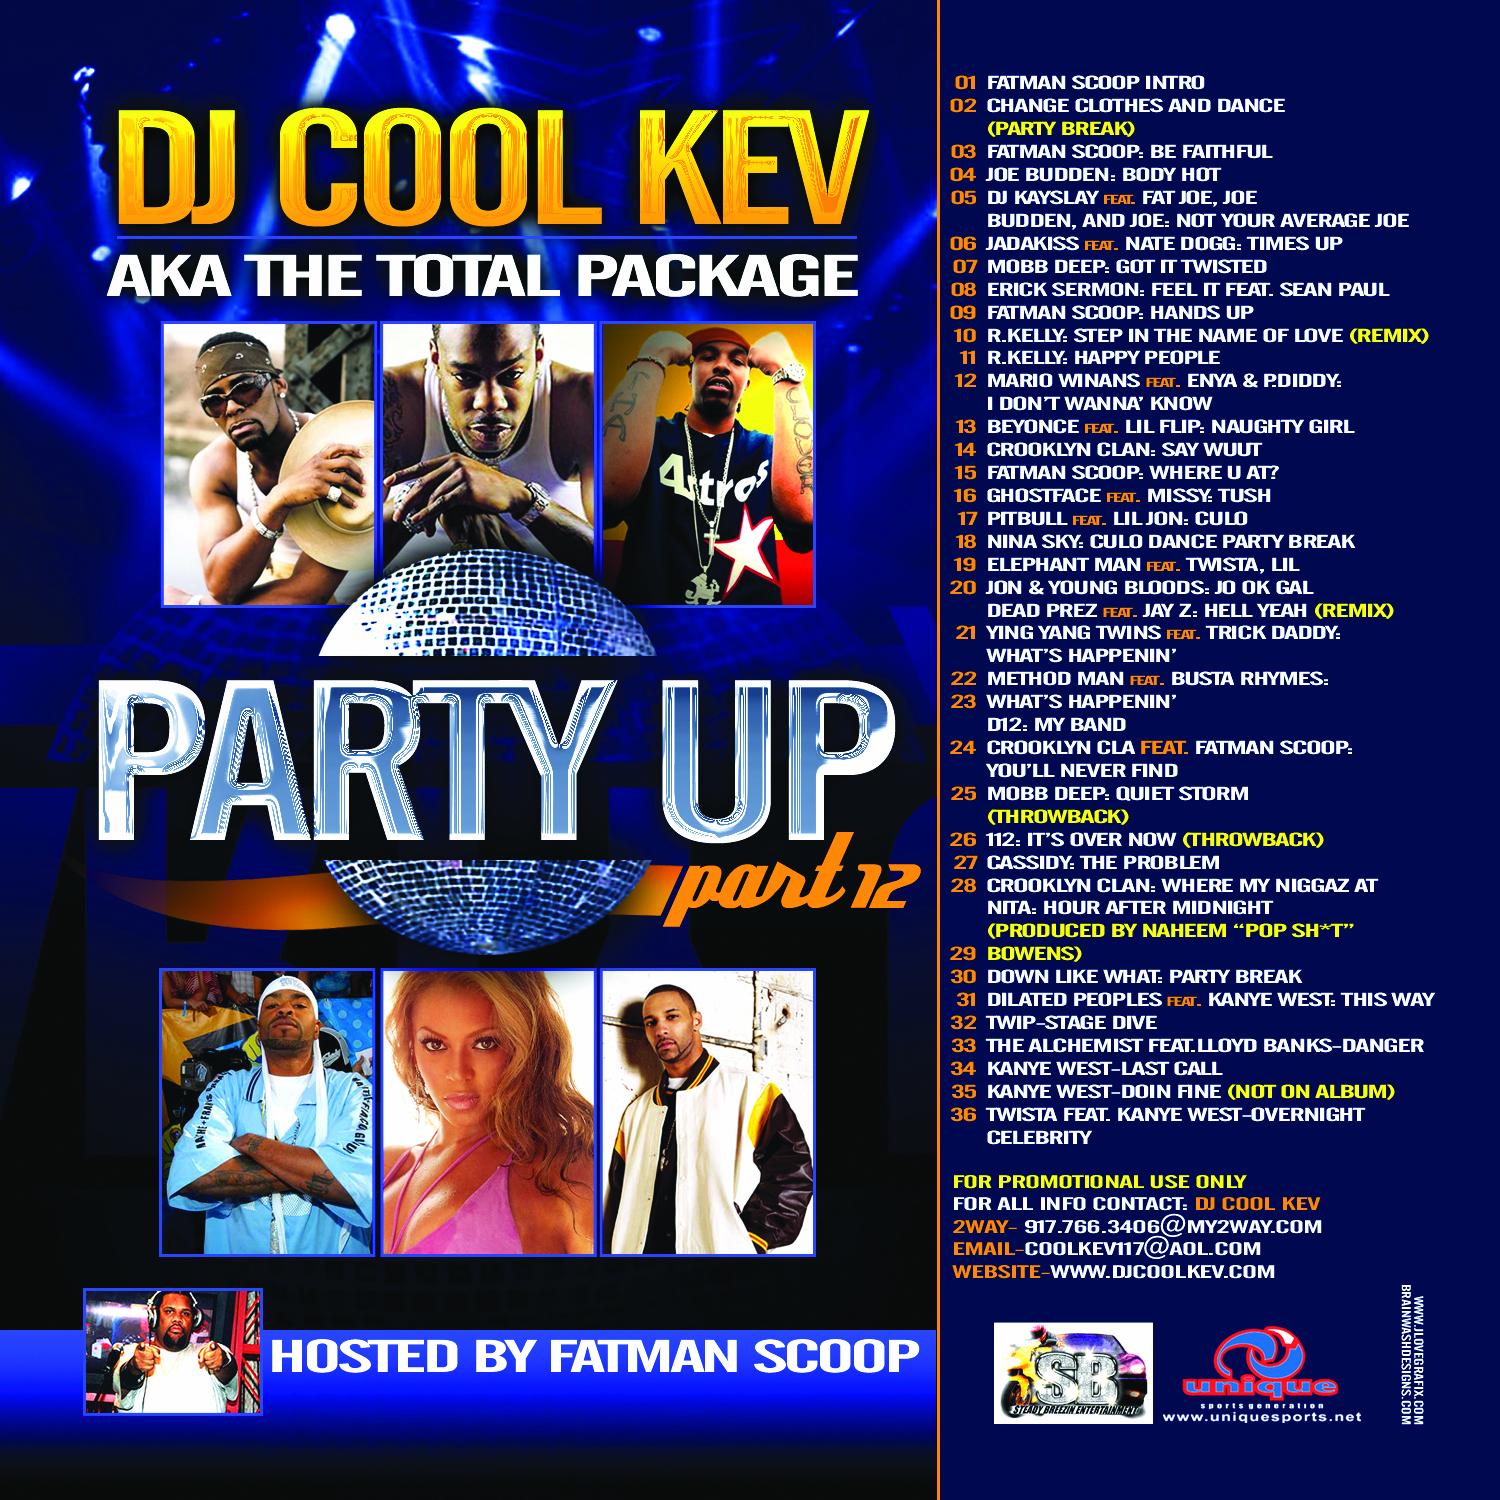 DJ Cool Kev – Party Up 12, Hip Hop, R&B, Throwback Hip Hop, Mixtape Downloads, Downloads